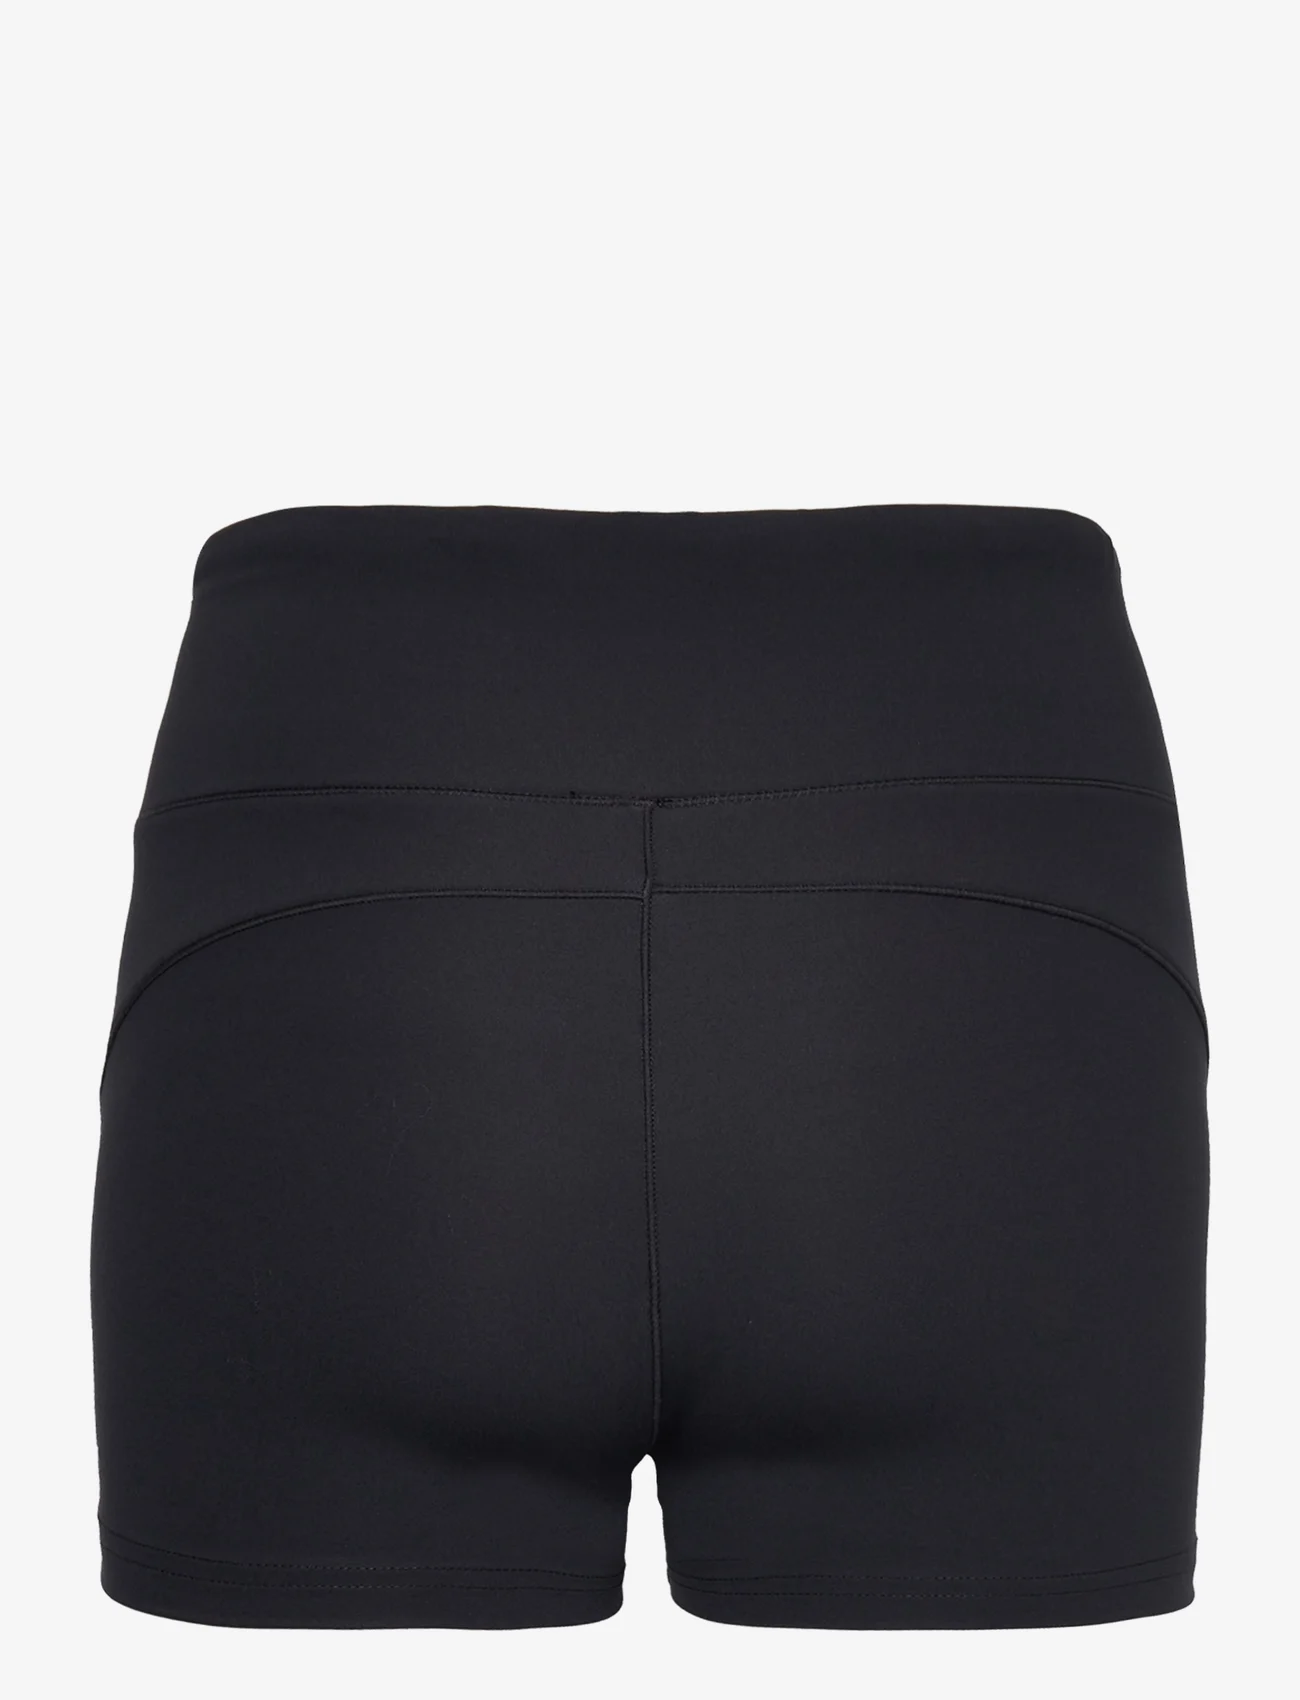 Craft - Adv Essence Hot Pants 2 W - trainings-shorts - black - 1